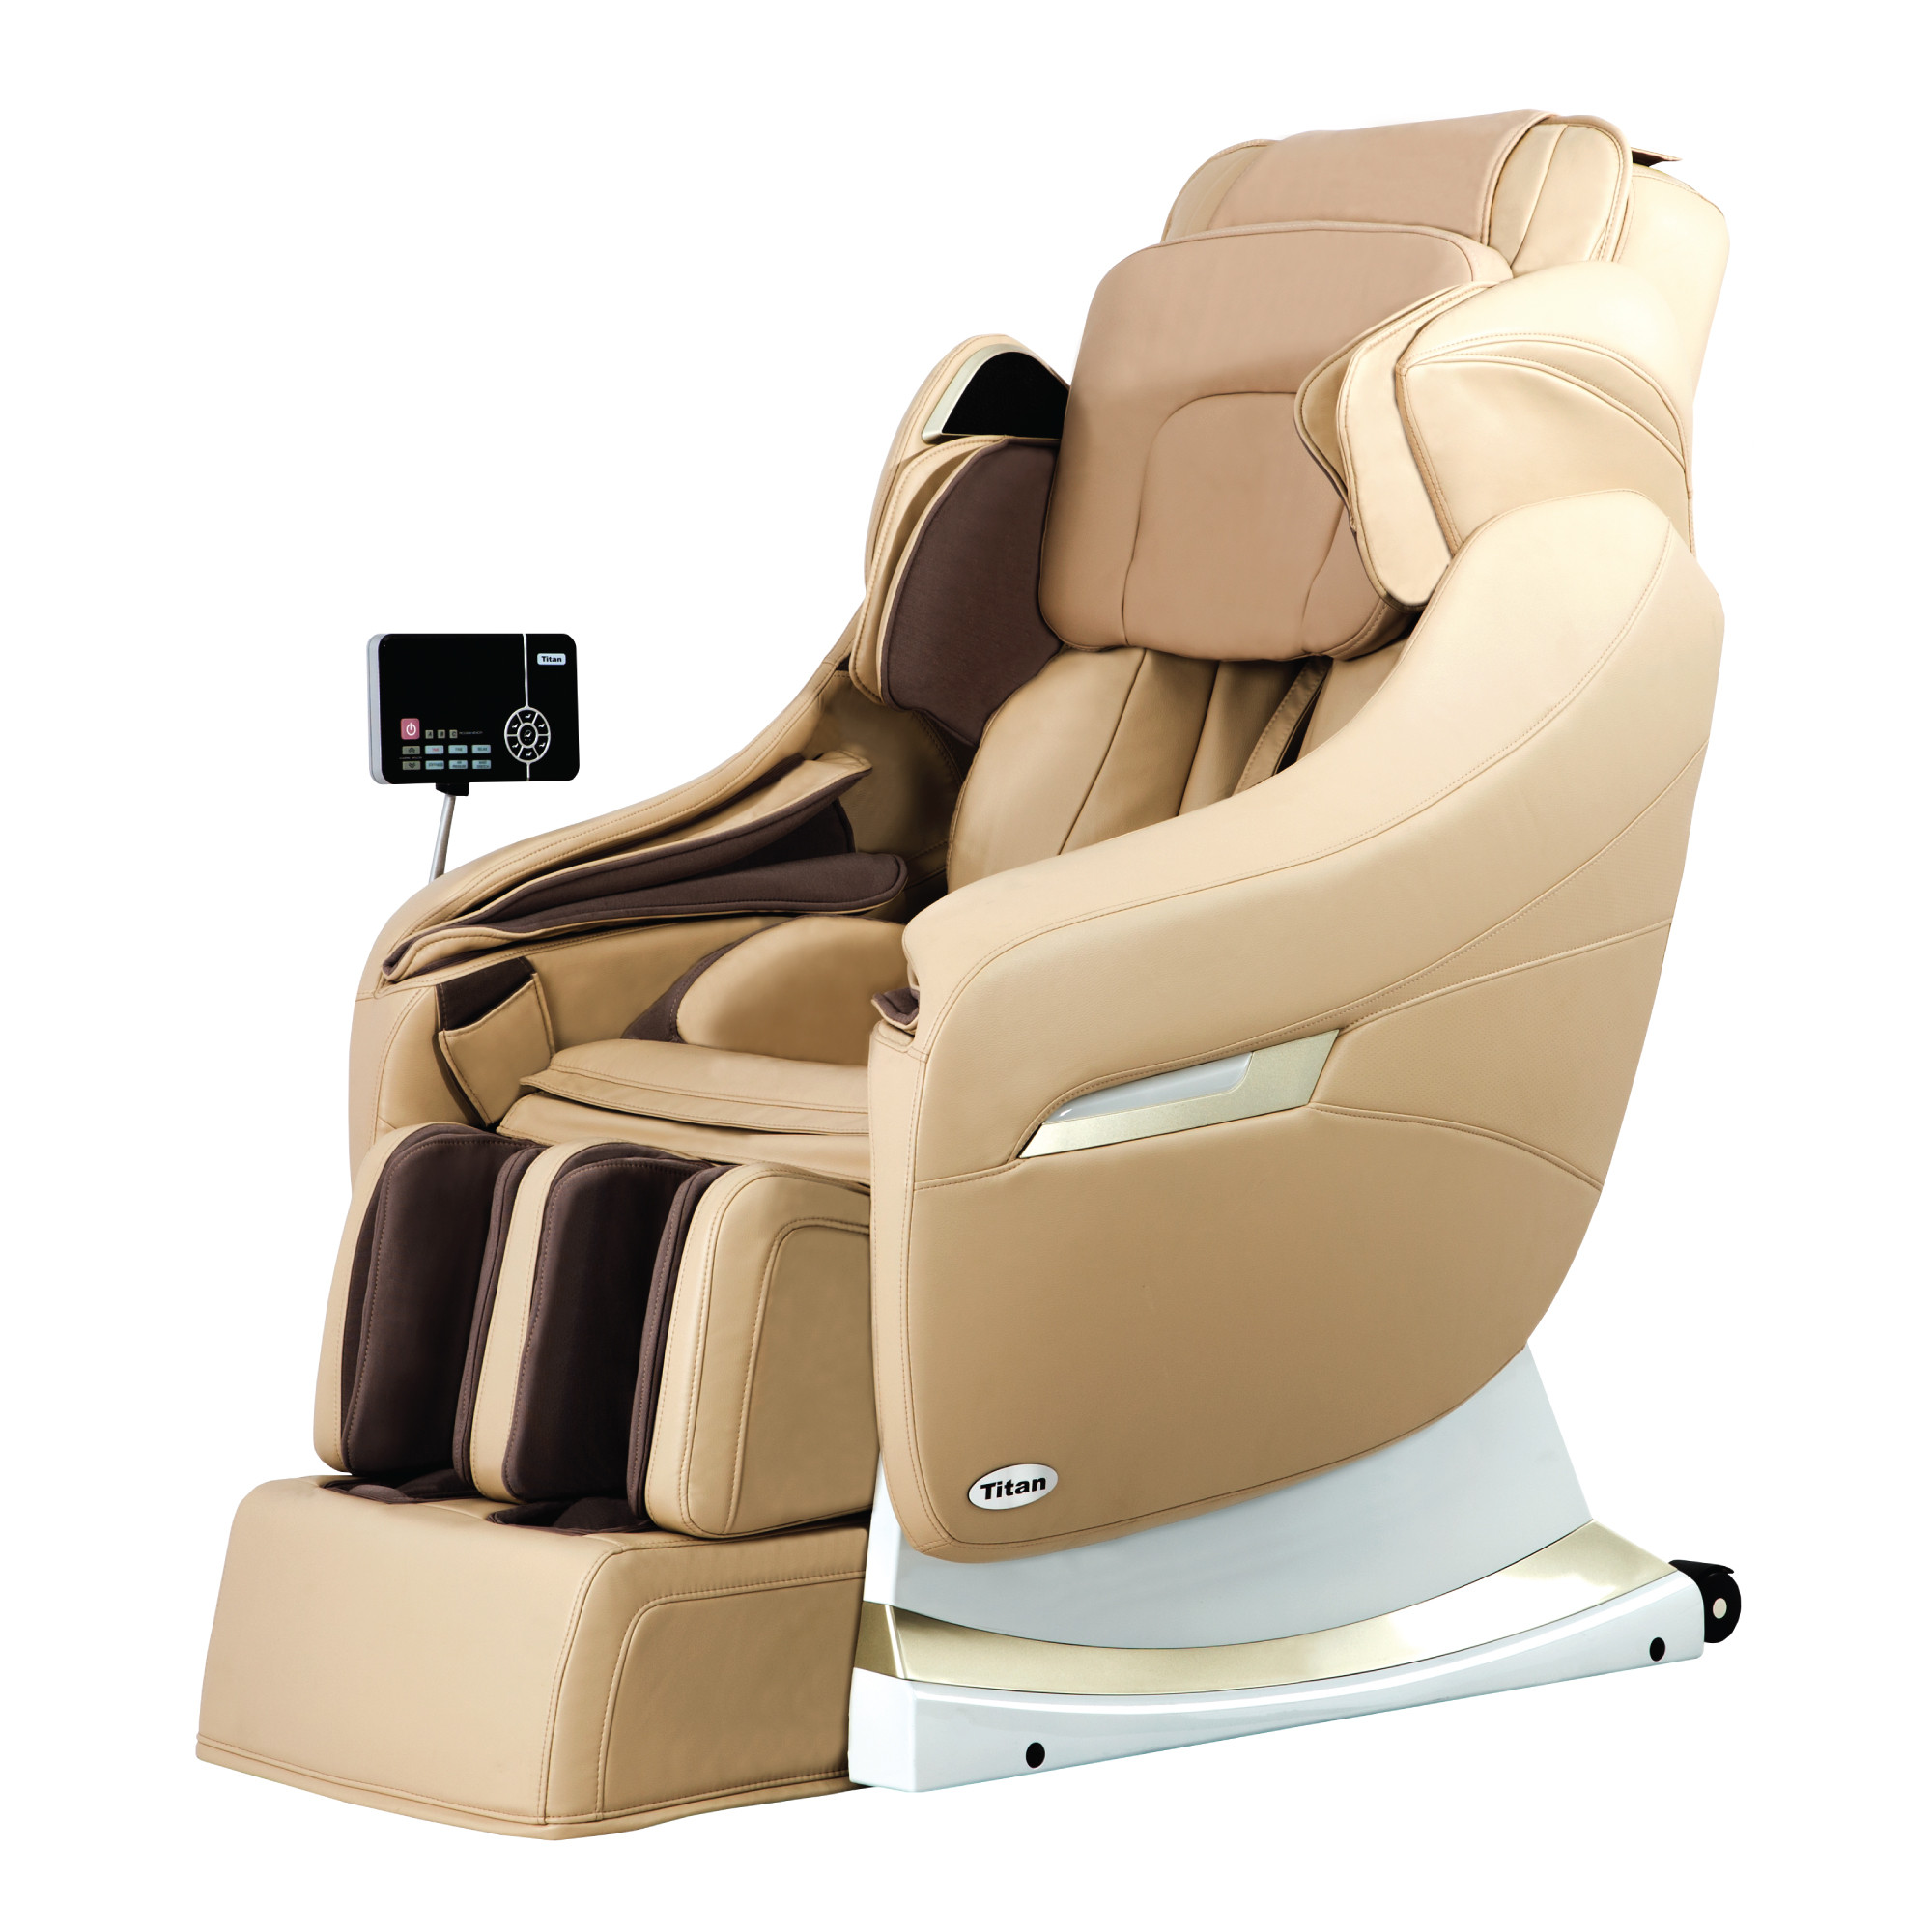 Titan Pro Executive Massage Chair - Cream - Front Angle View